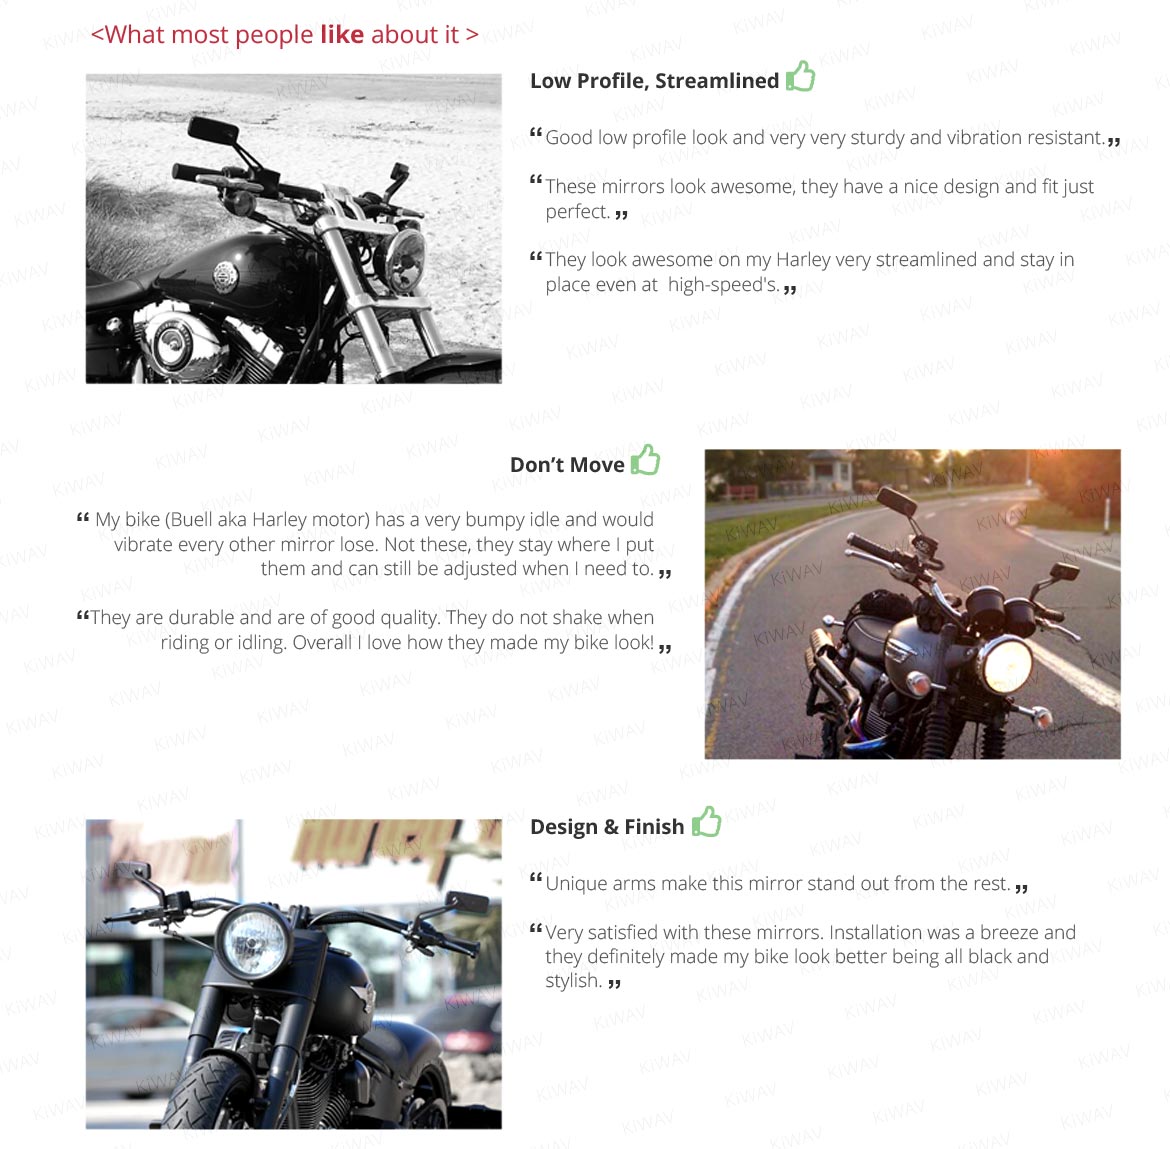 KiWAV Magazi Classic motorcycle mirror series universal